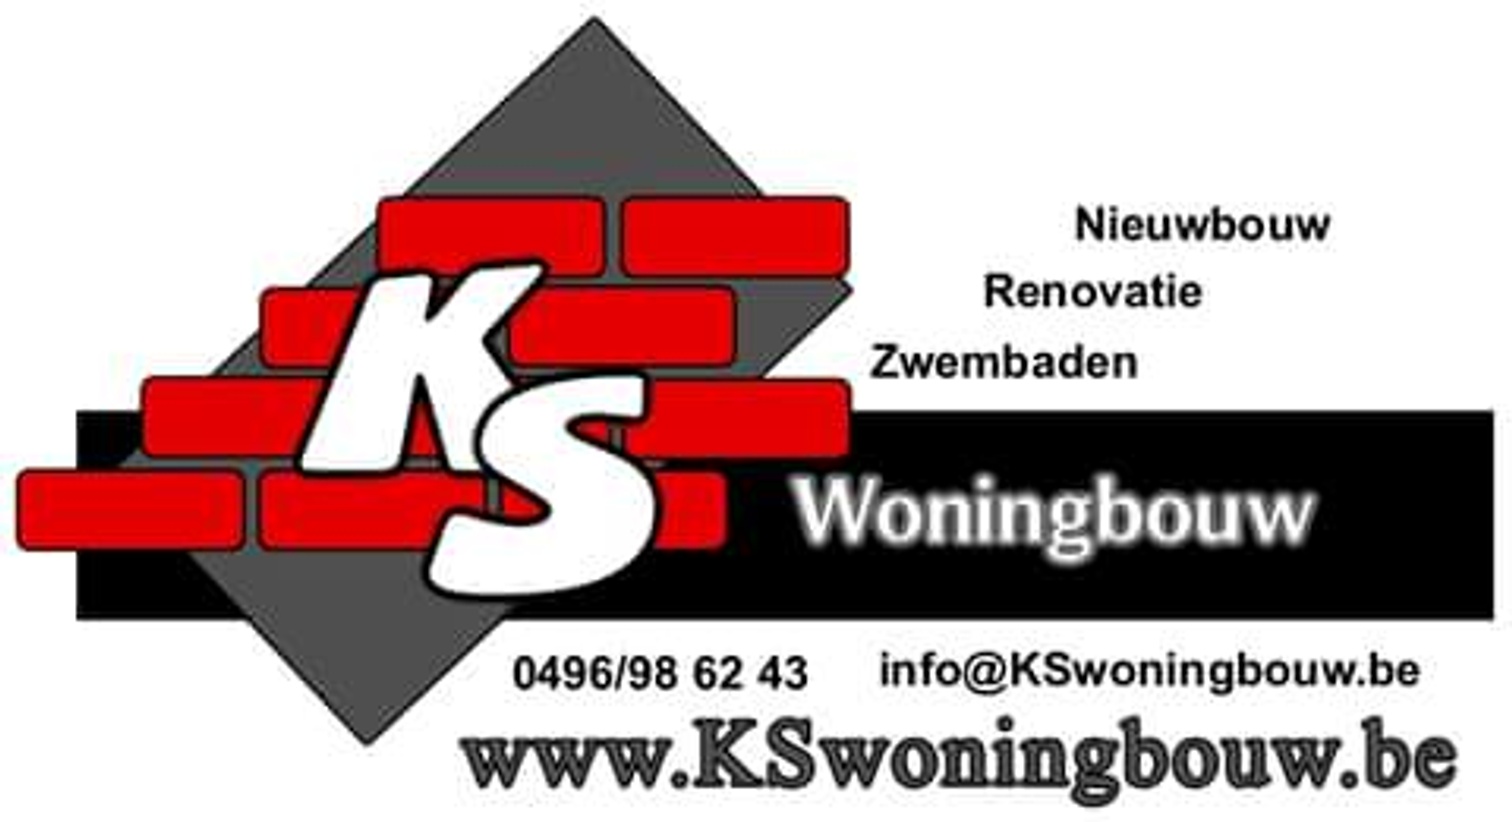 KS Woningbouw logo